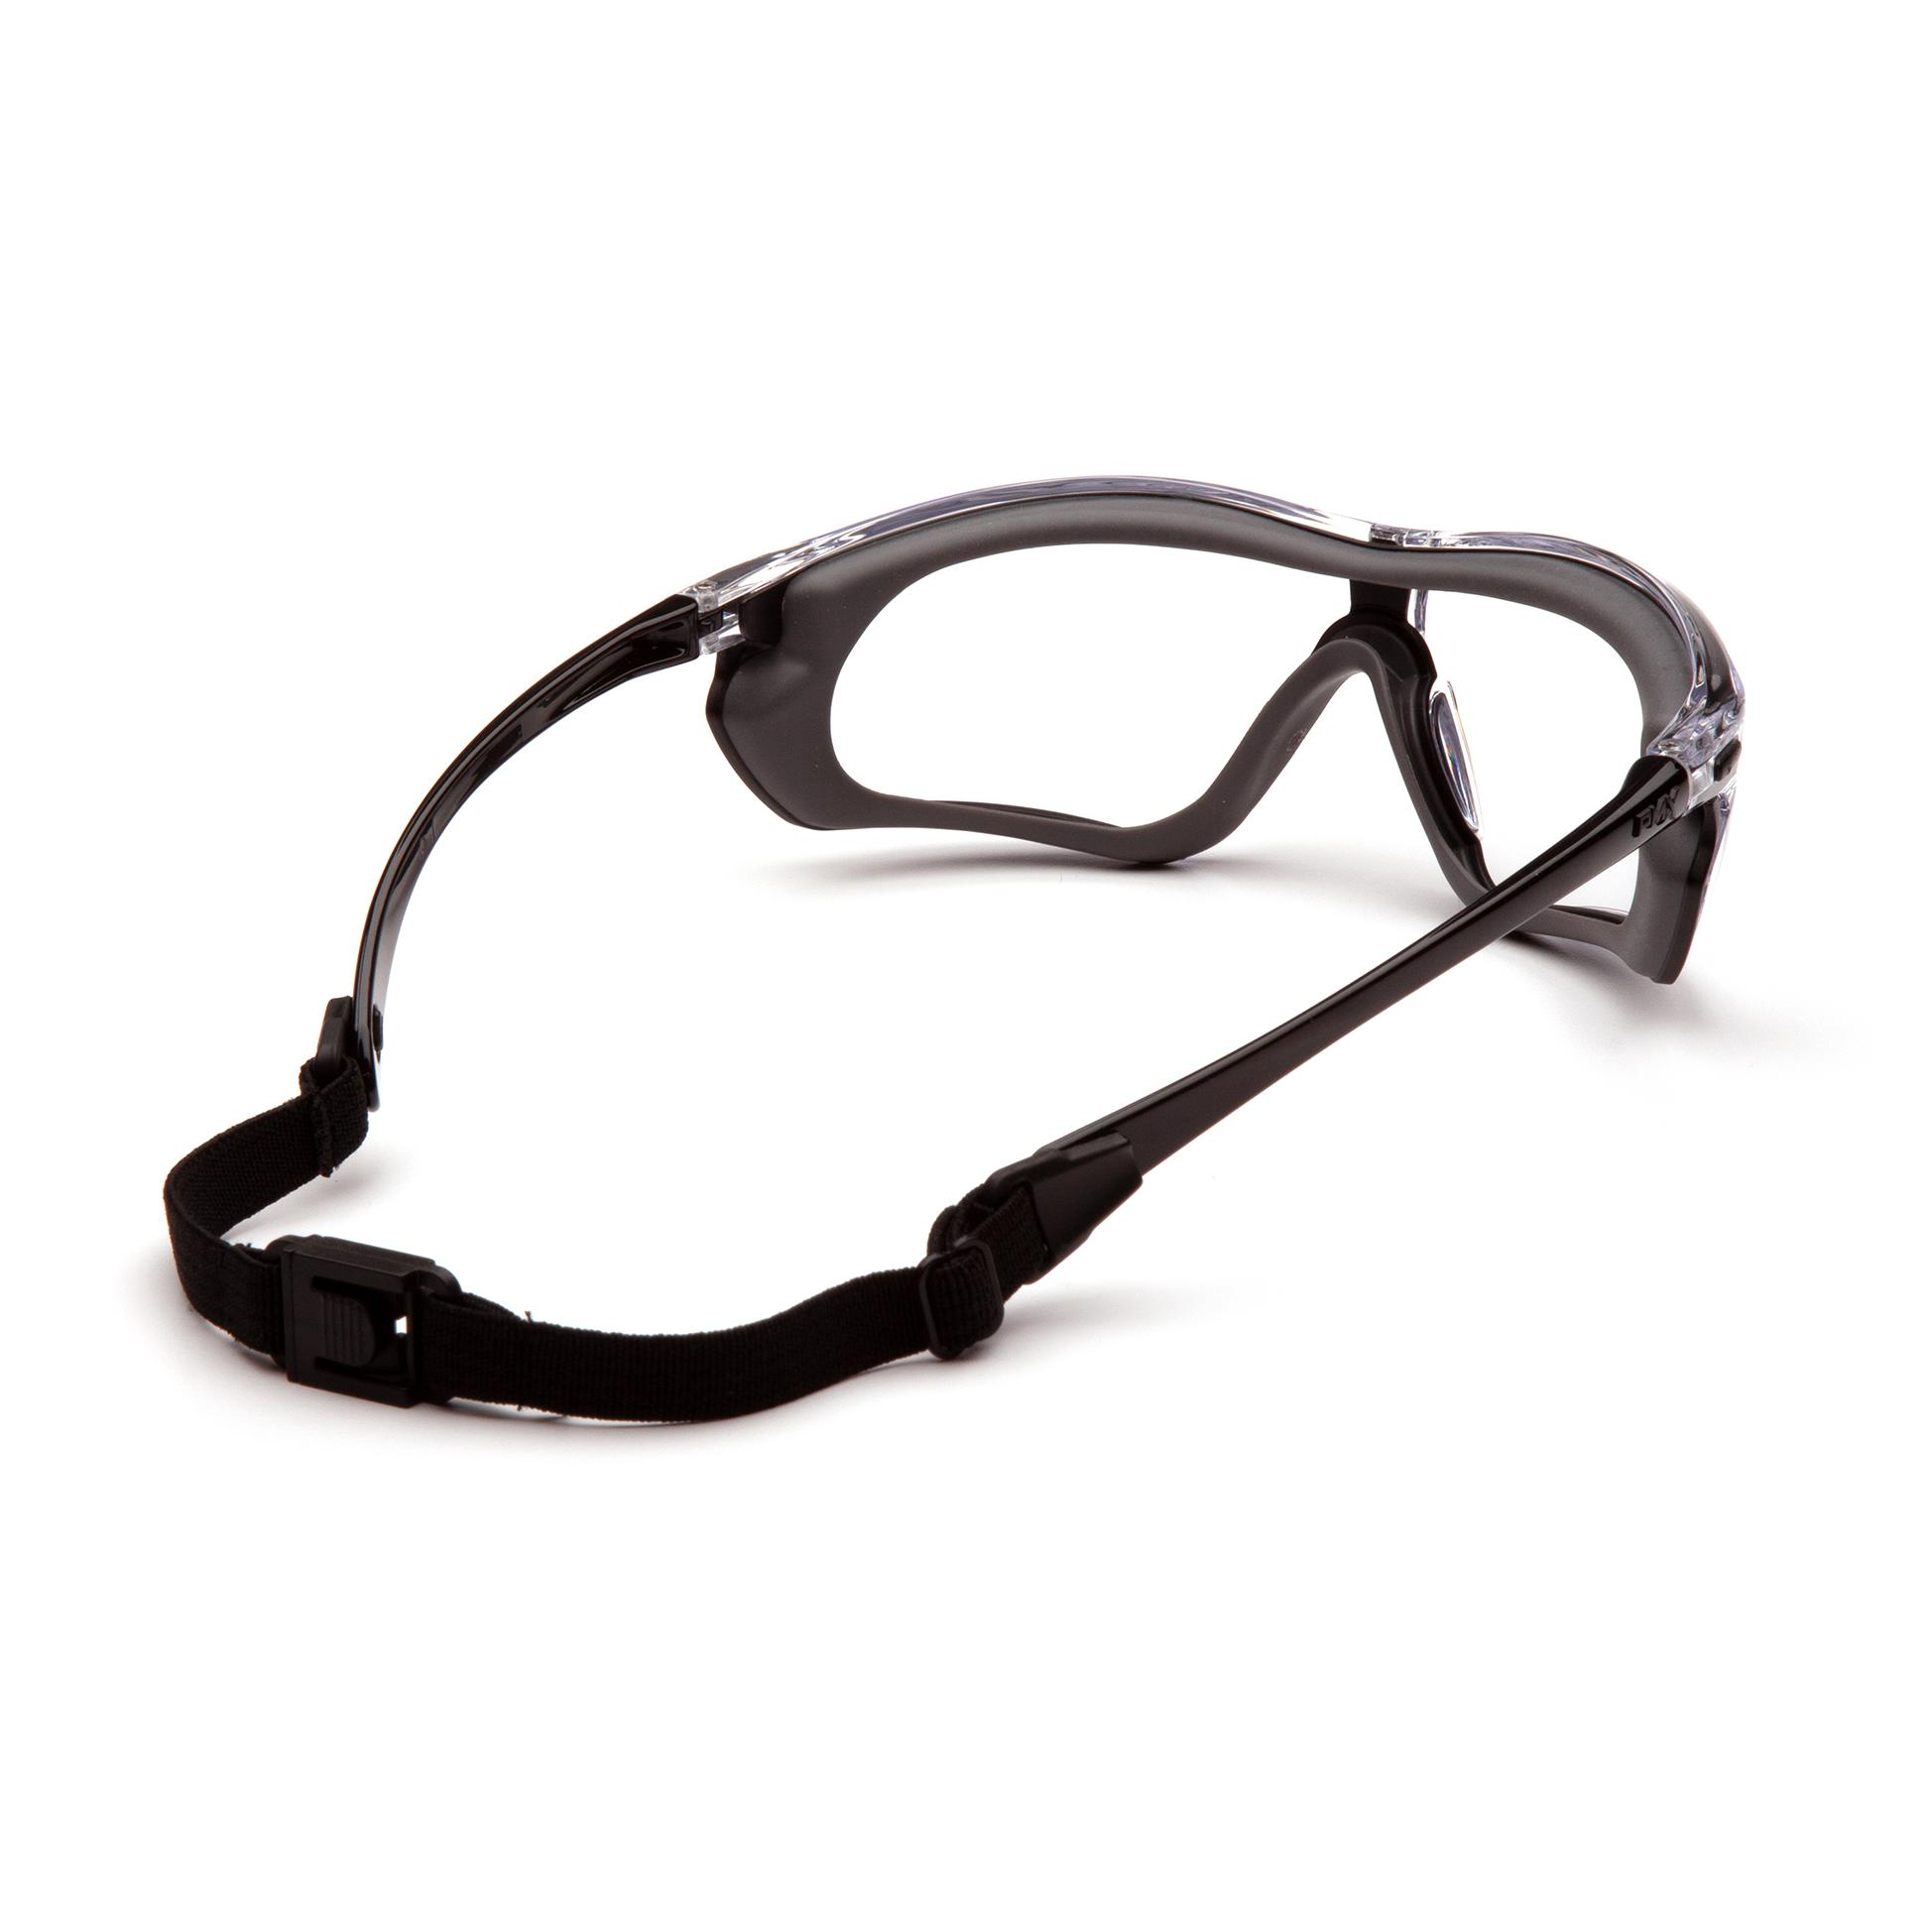 Pyramex SBG10610DT Crossovr Safety Glasses - Black/Gray Frame w/ Rubber ...